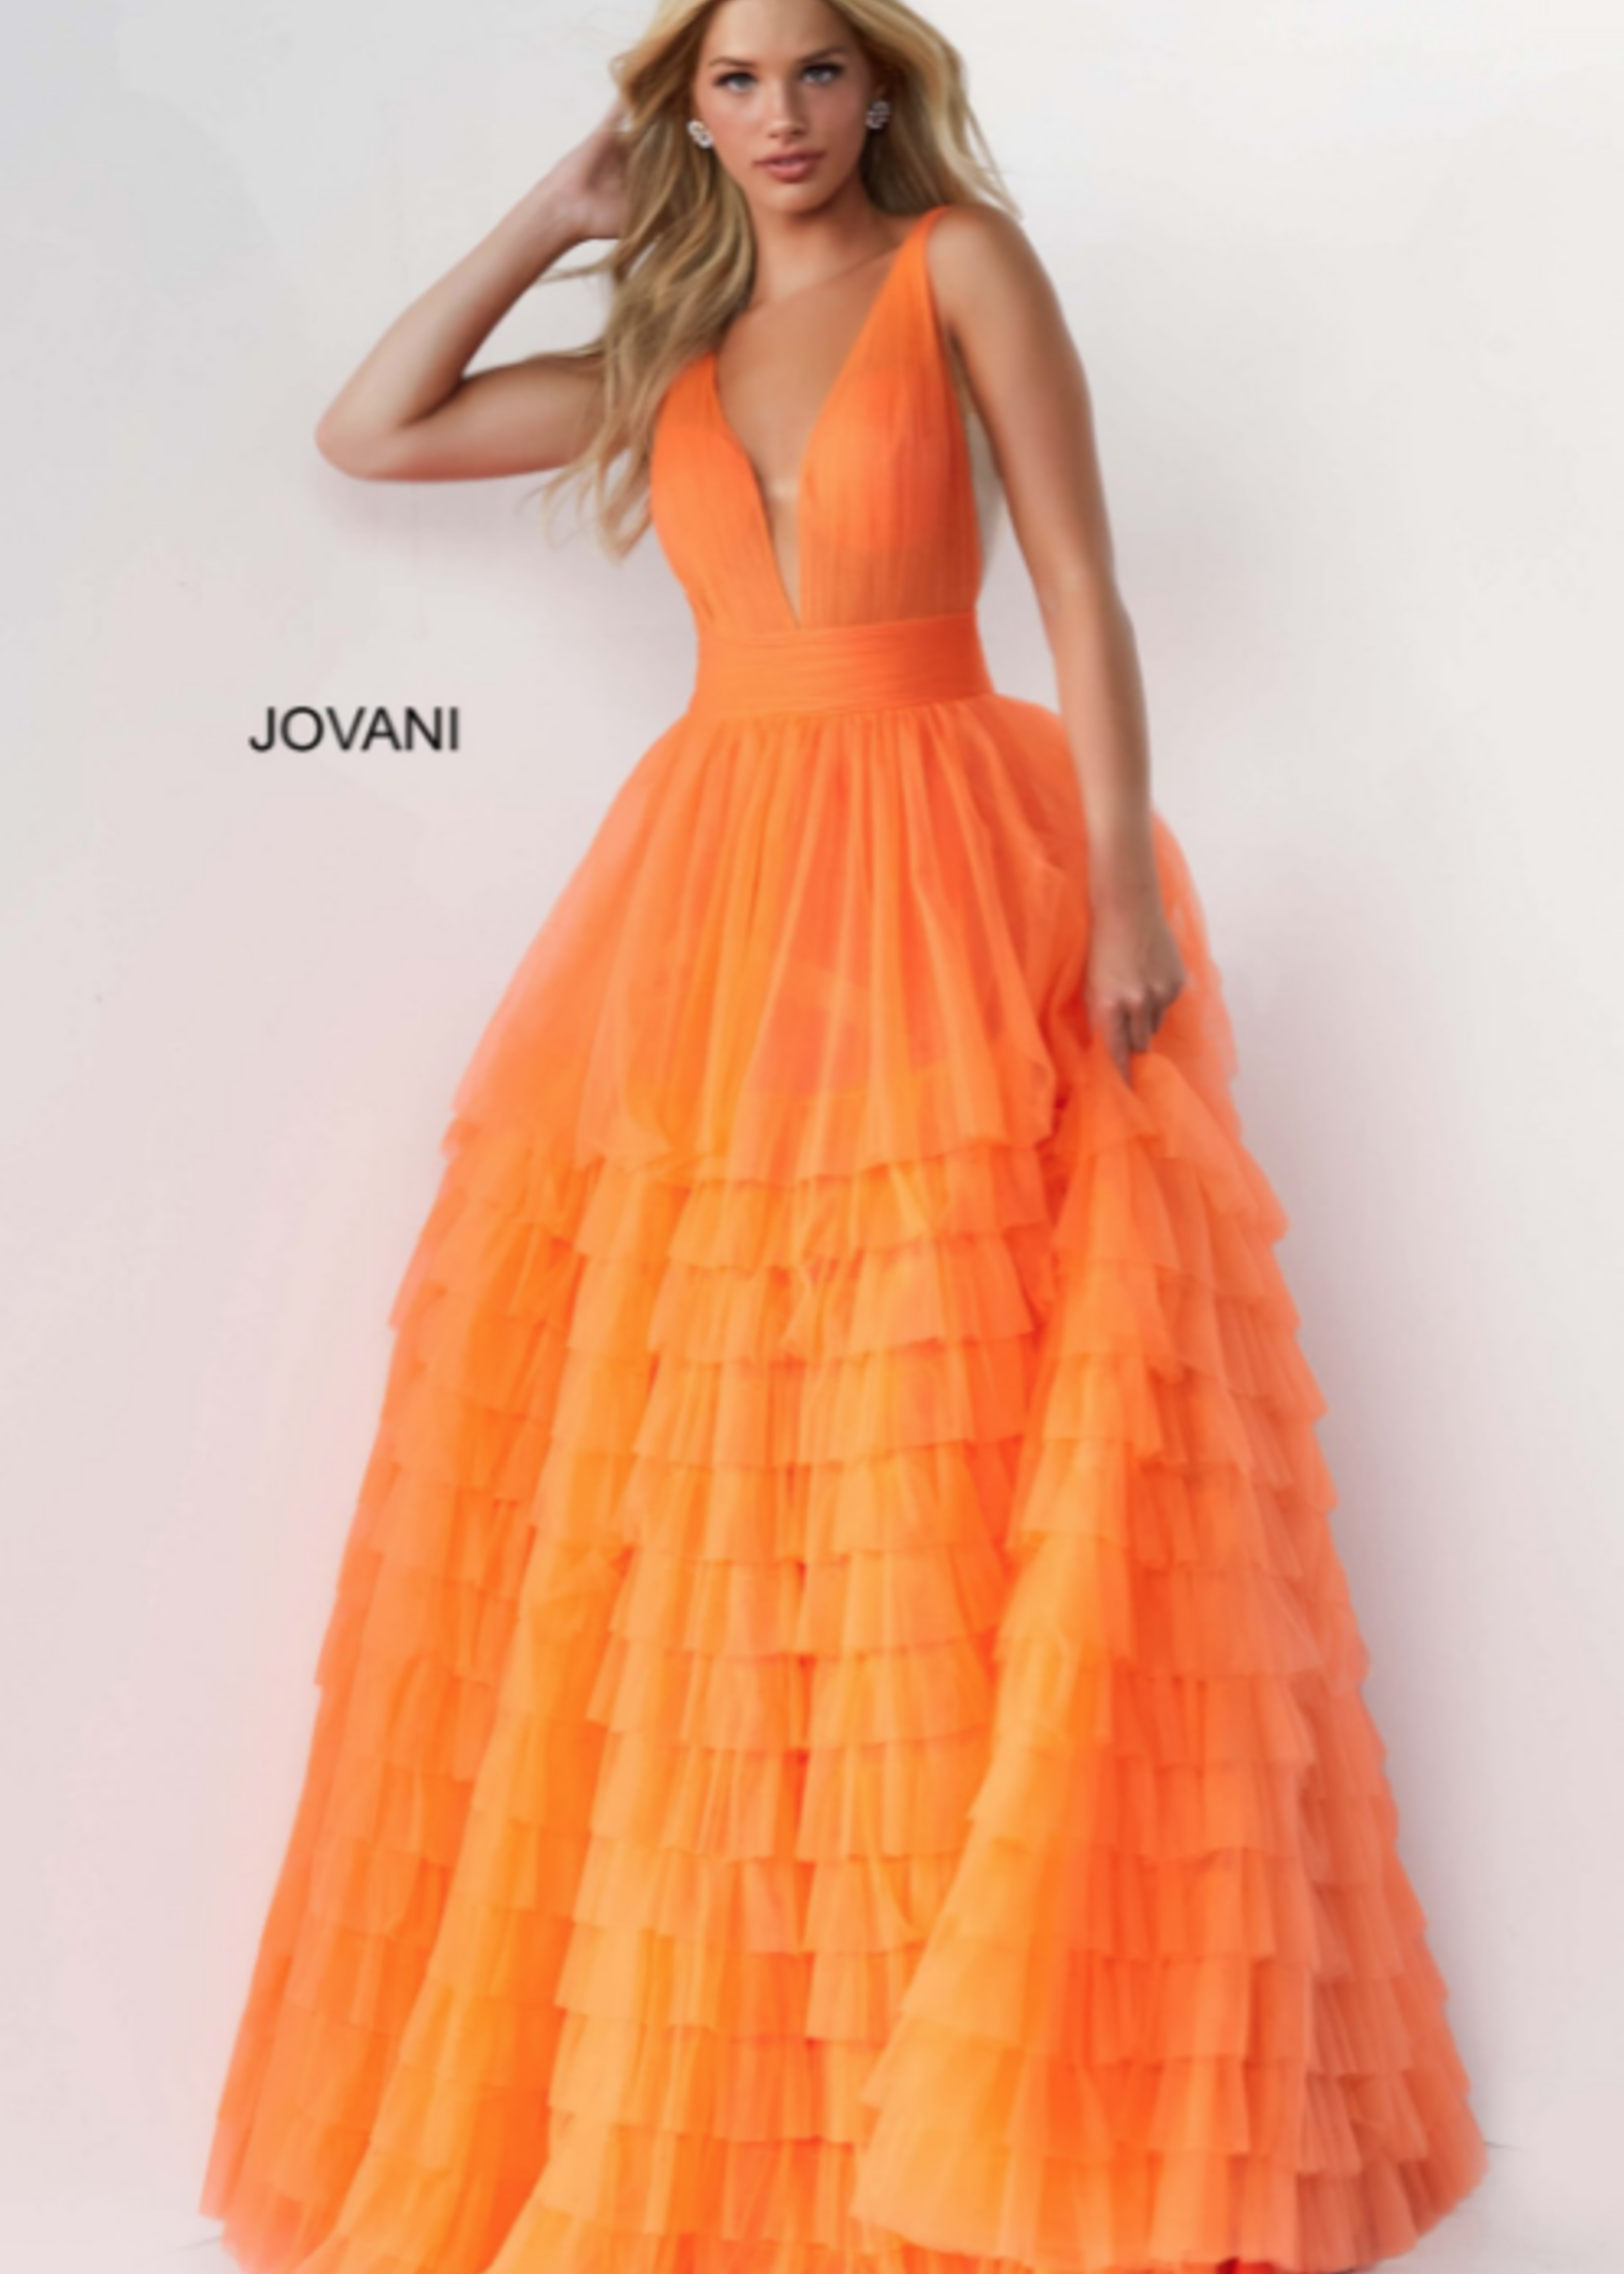 Jovani Dream Maker Formal Dress